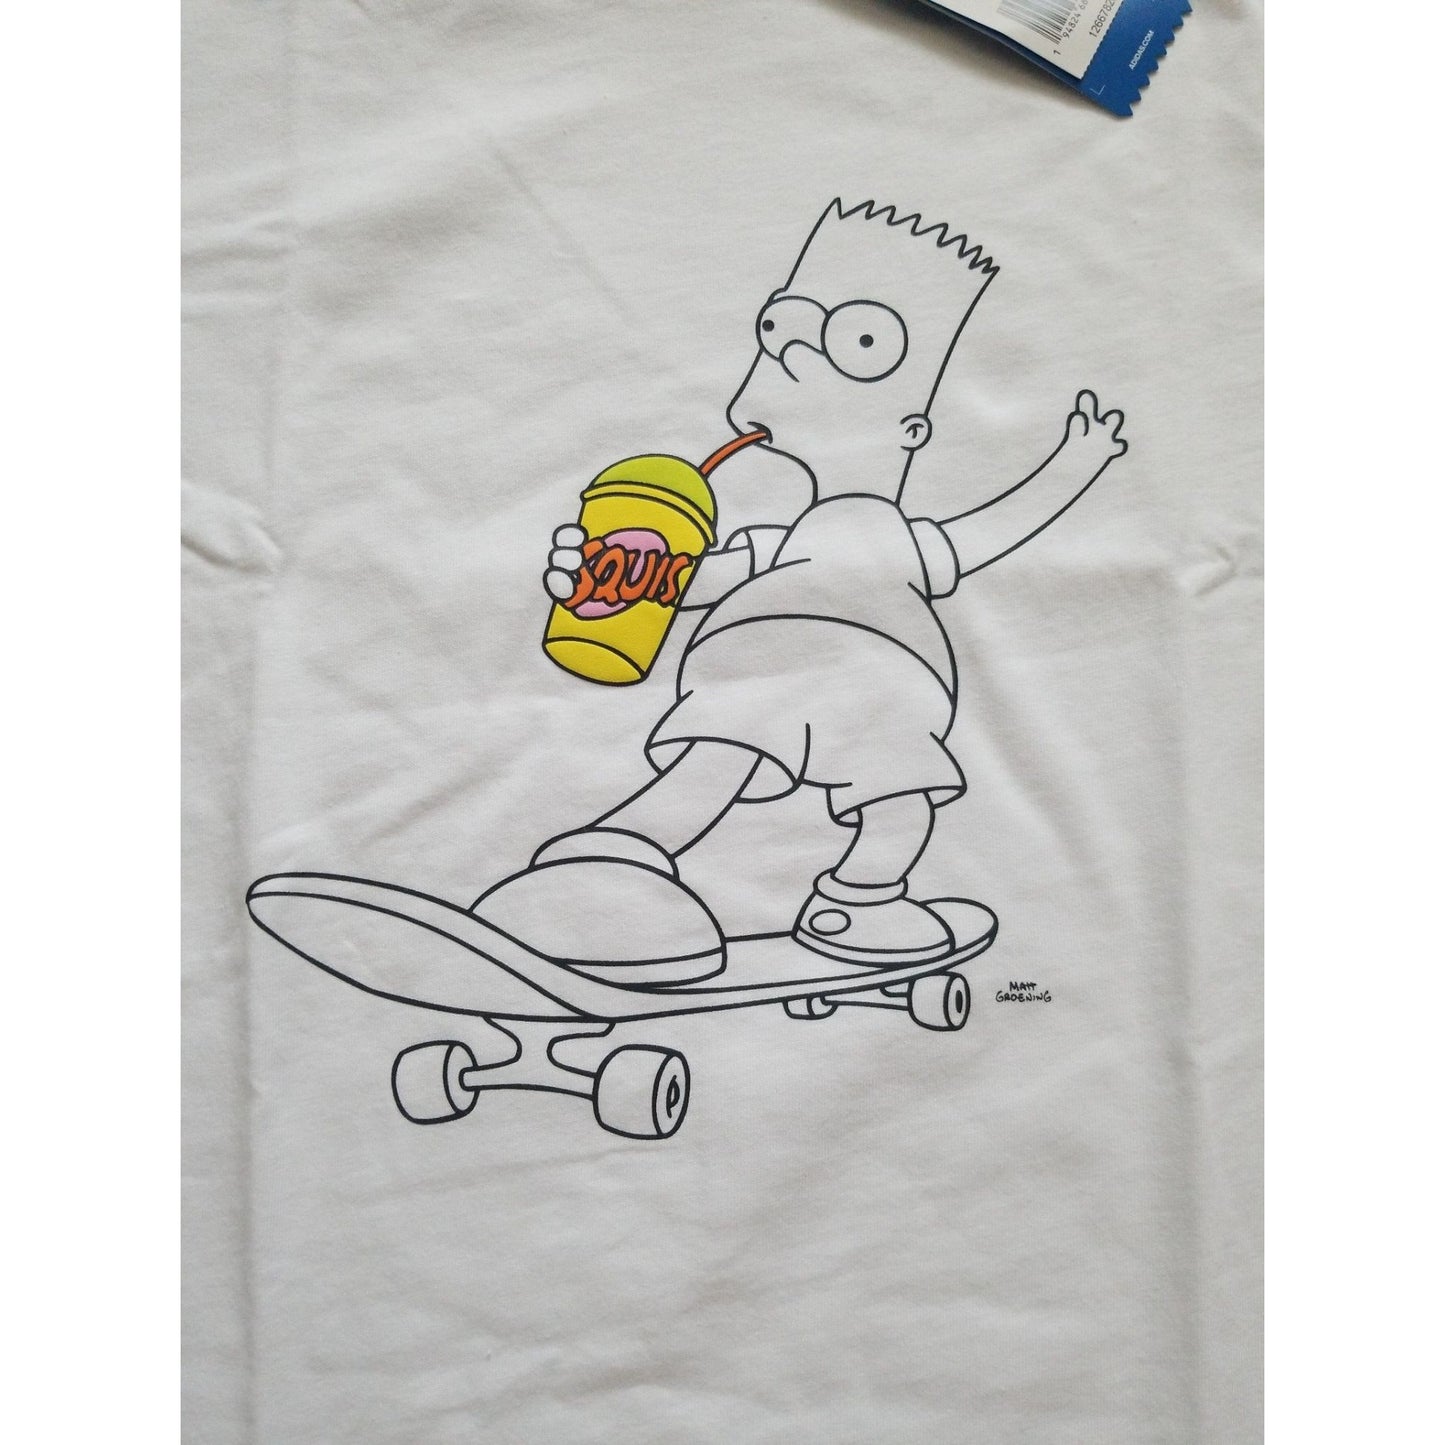 Adidas X The Bart Simpson Squishee Collaboration T-Shirt design